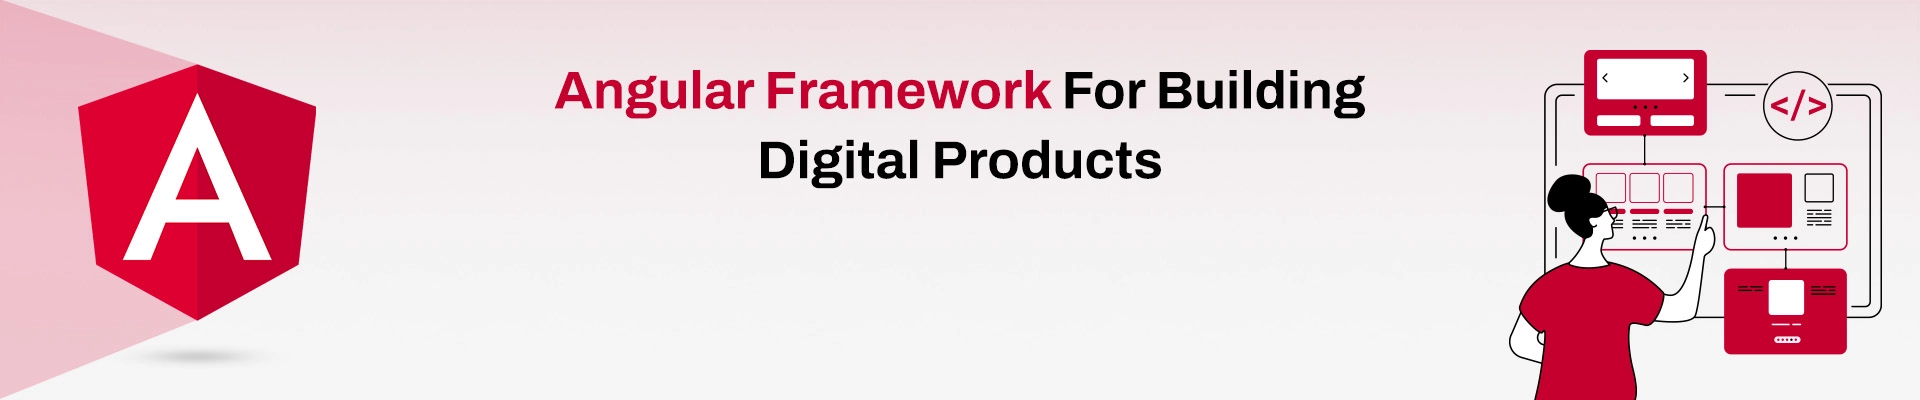 Angular Framework For Building Digital Products